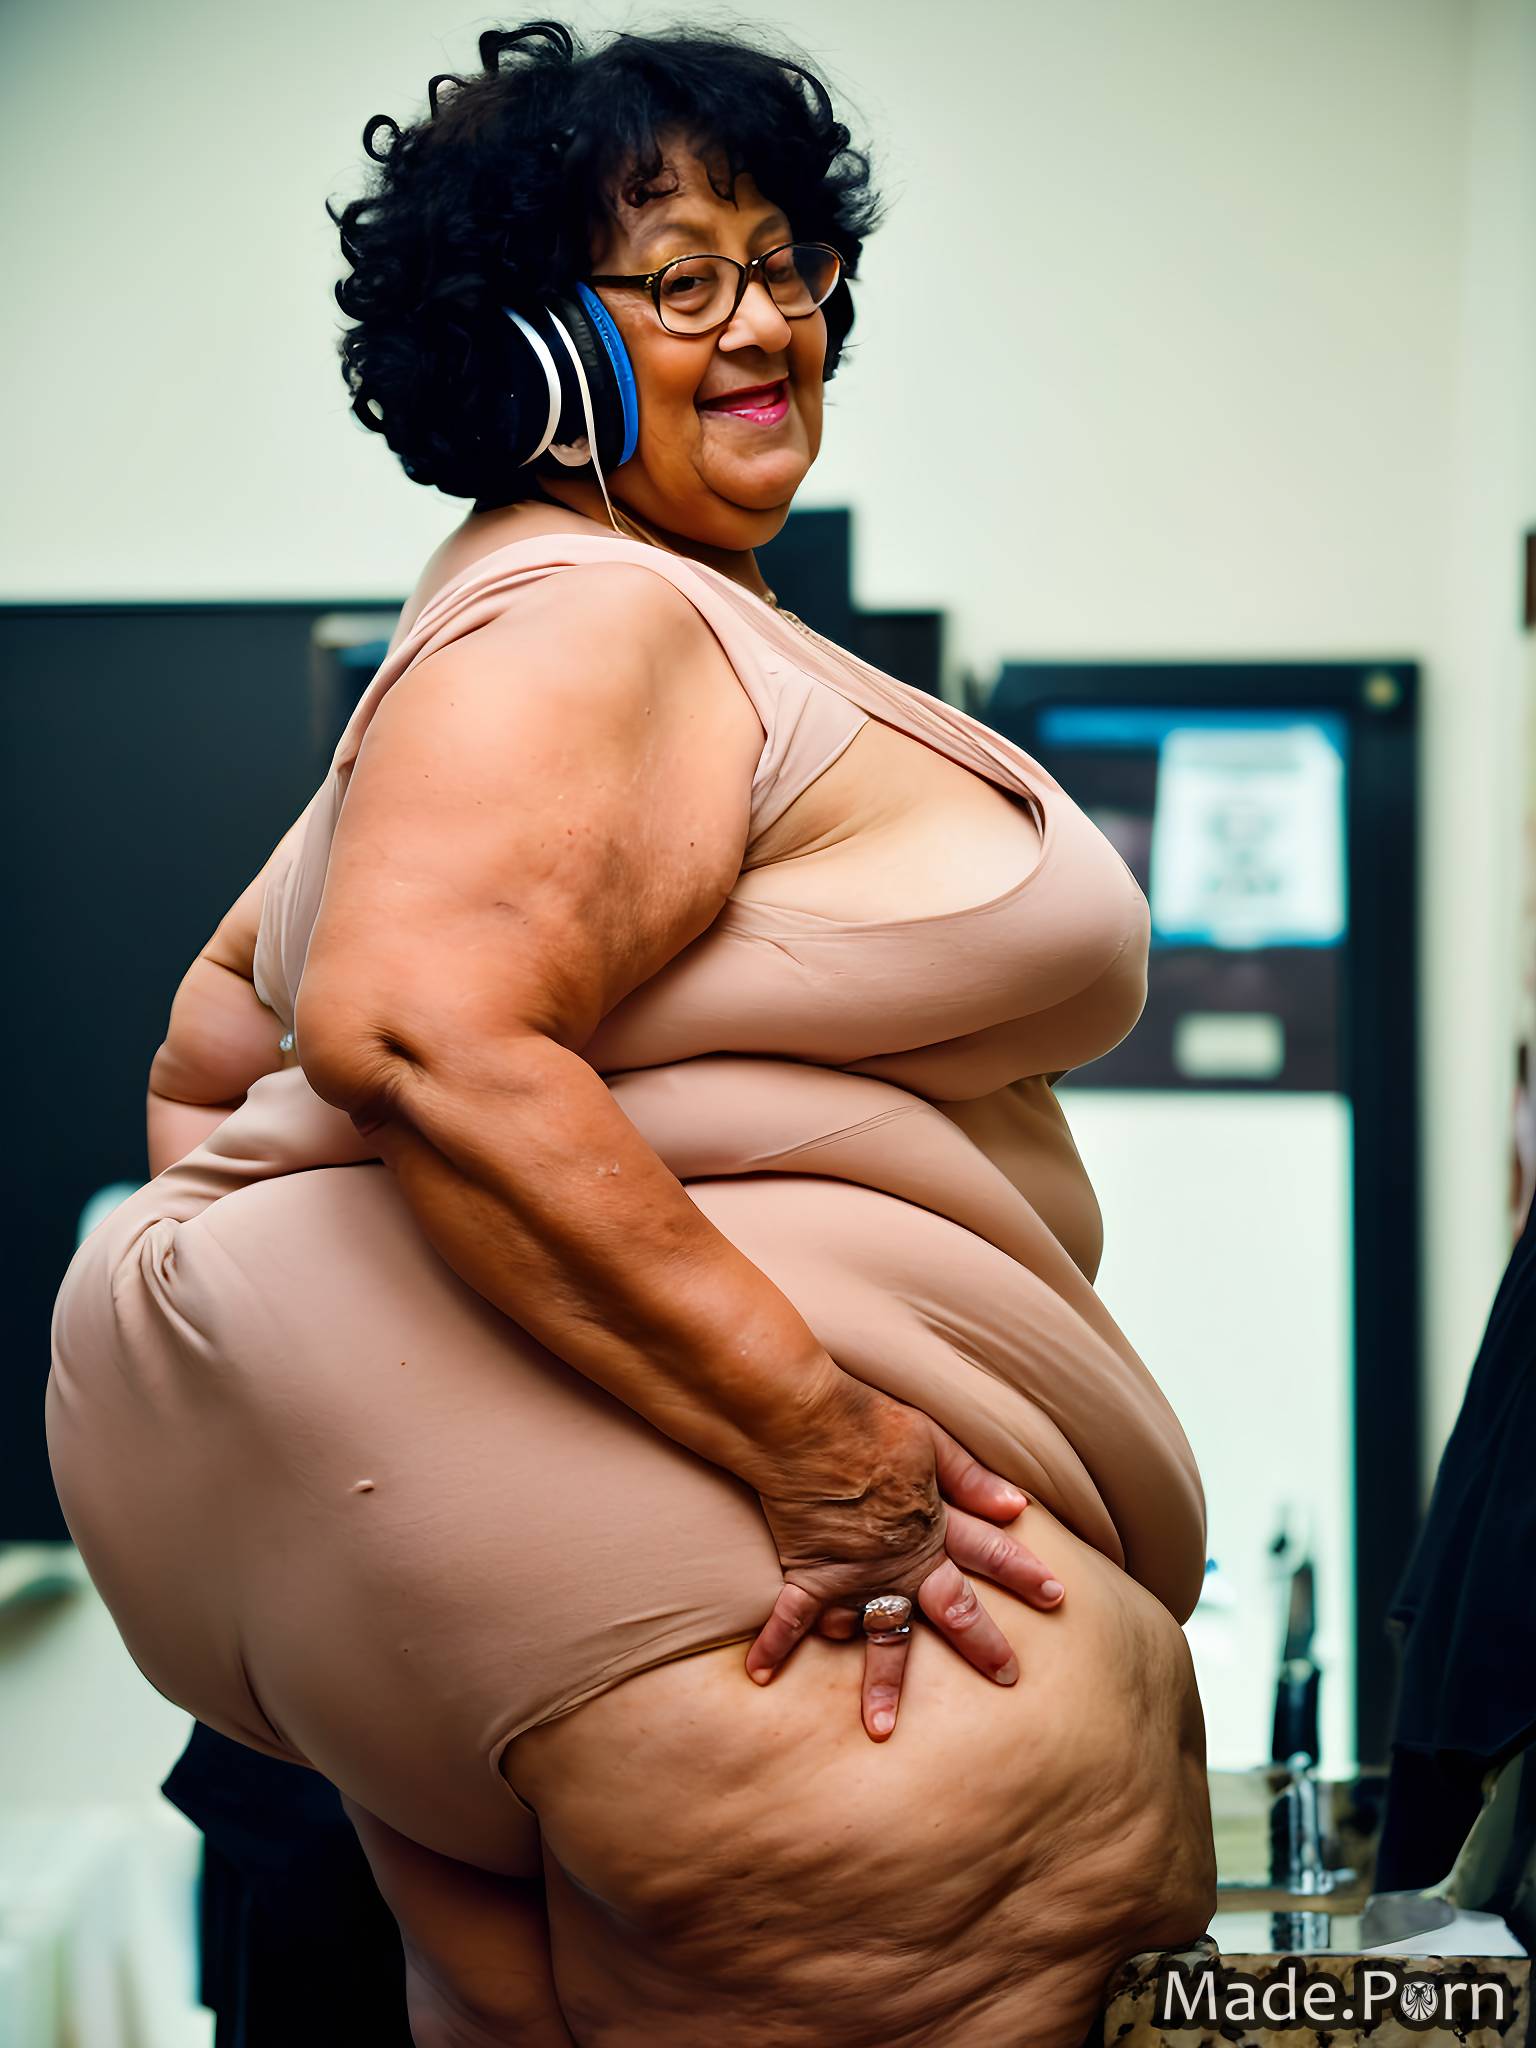 bathroom headphones big ass woman nude airport fat